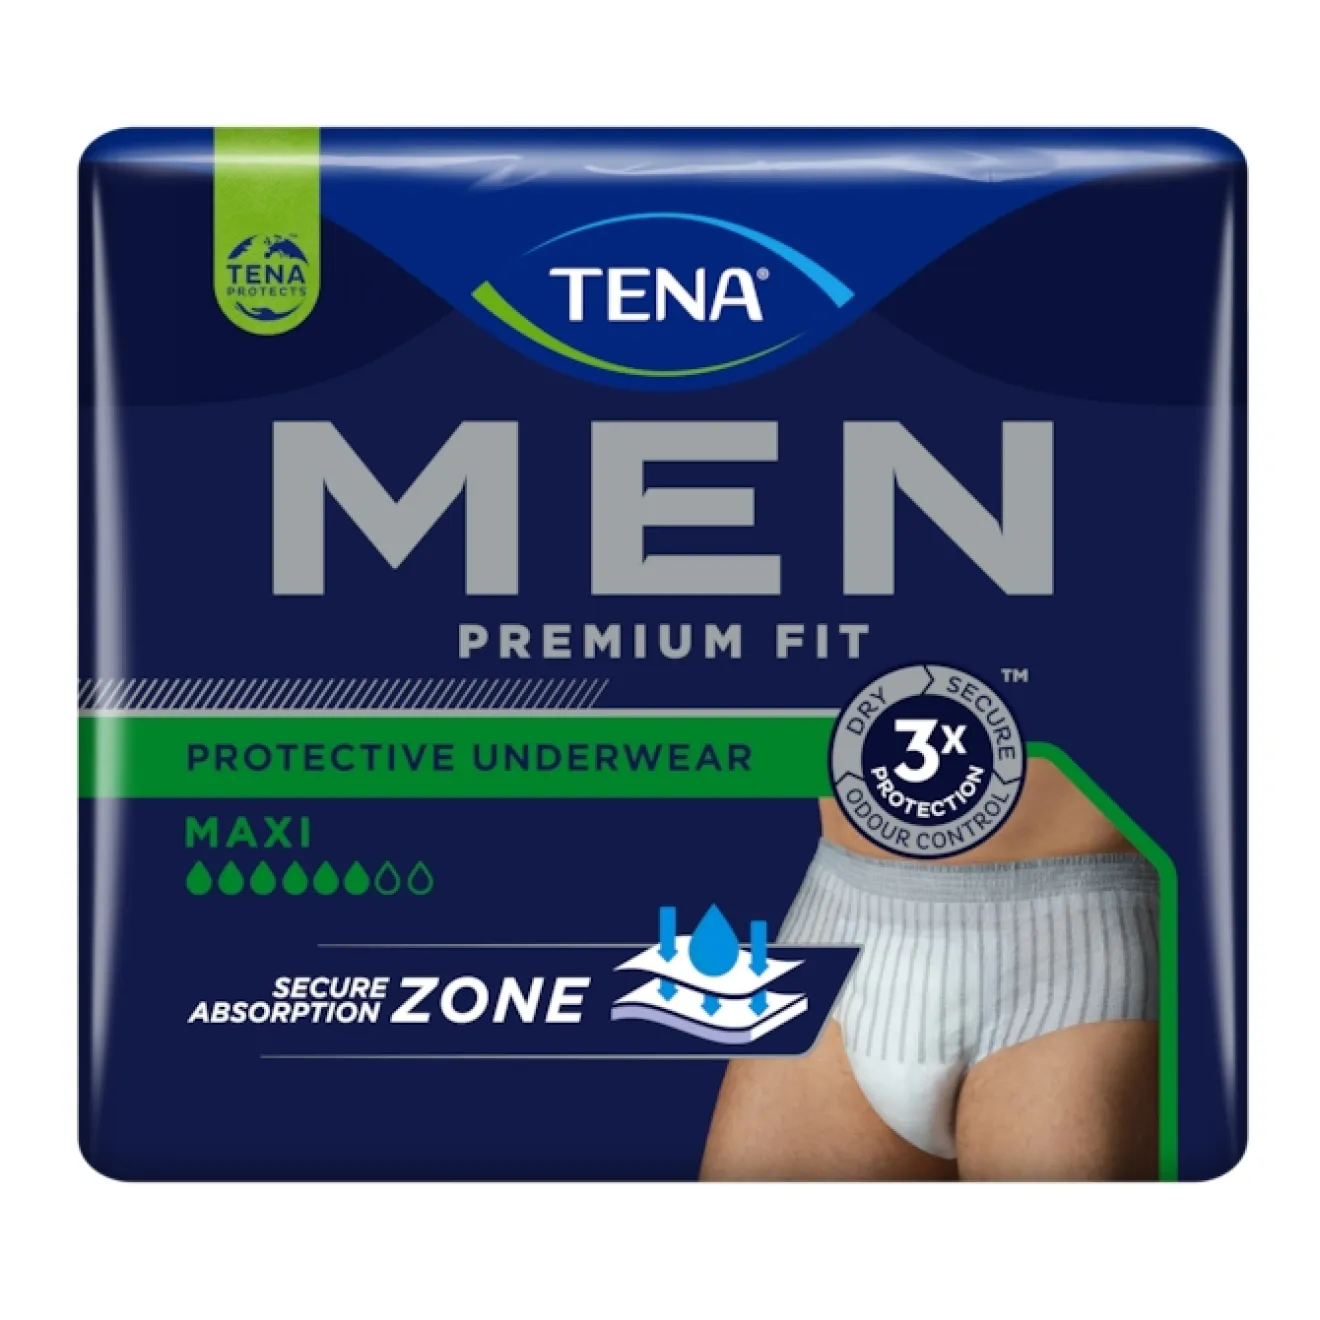 TENA MEN Premium Fit Inkontinenz Pants maxi L/XL 4x10 ST